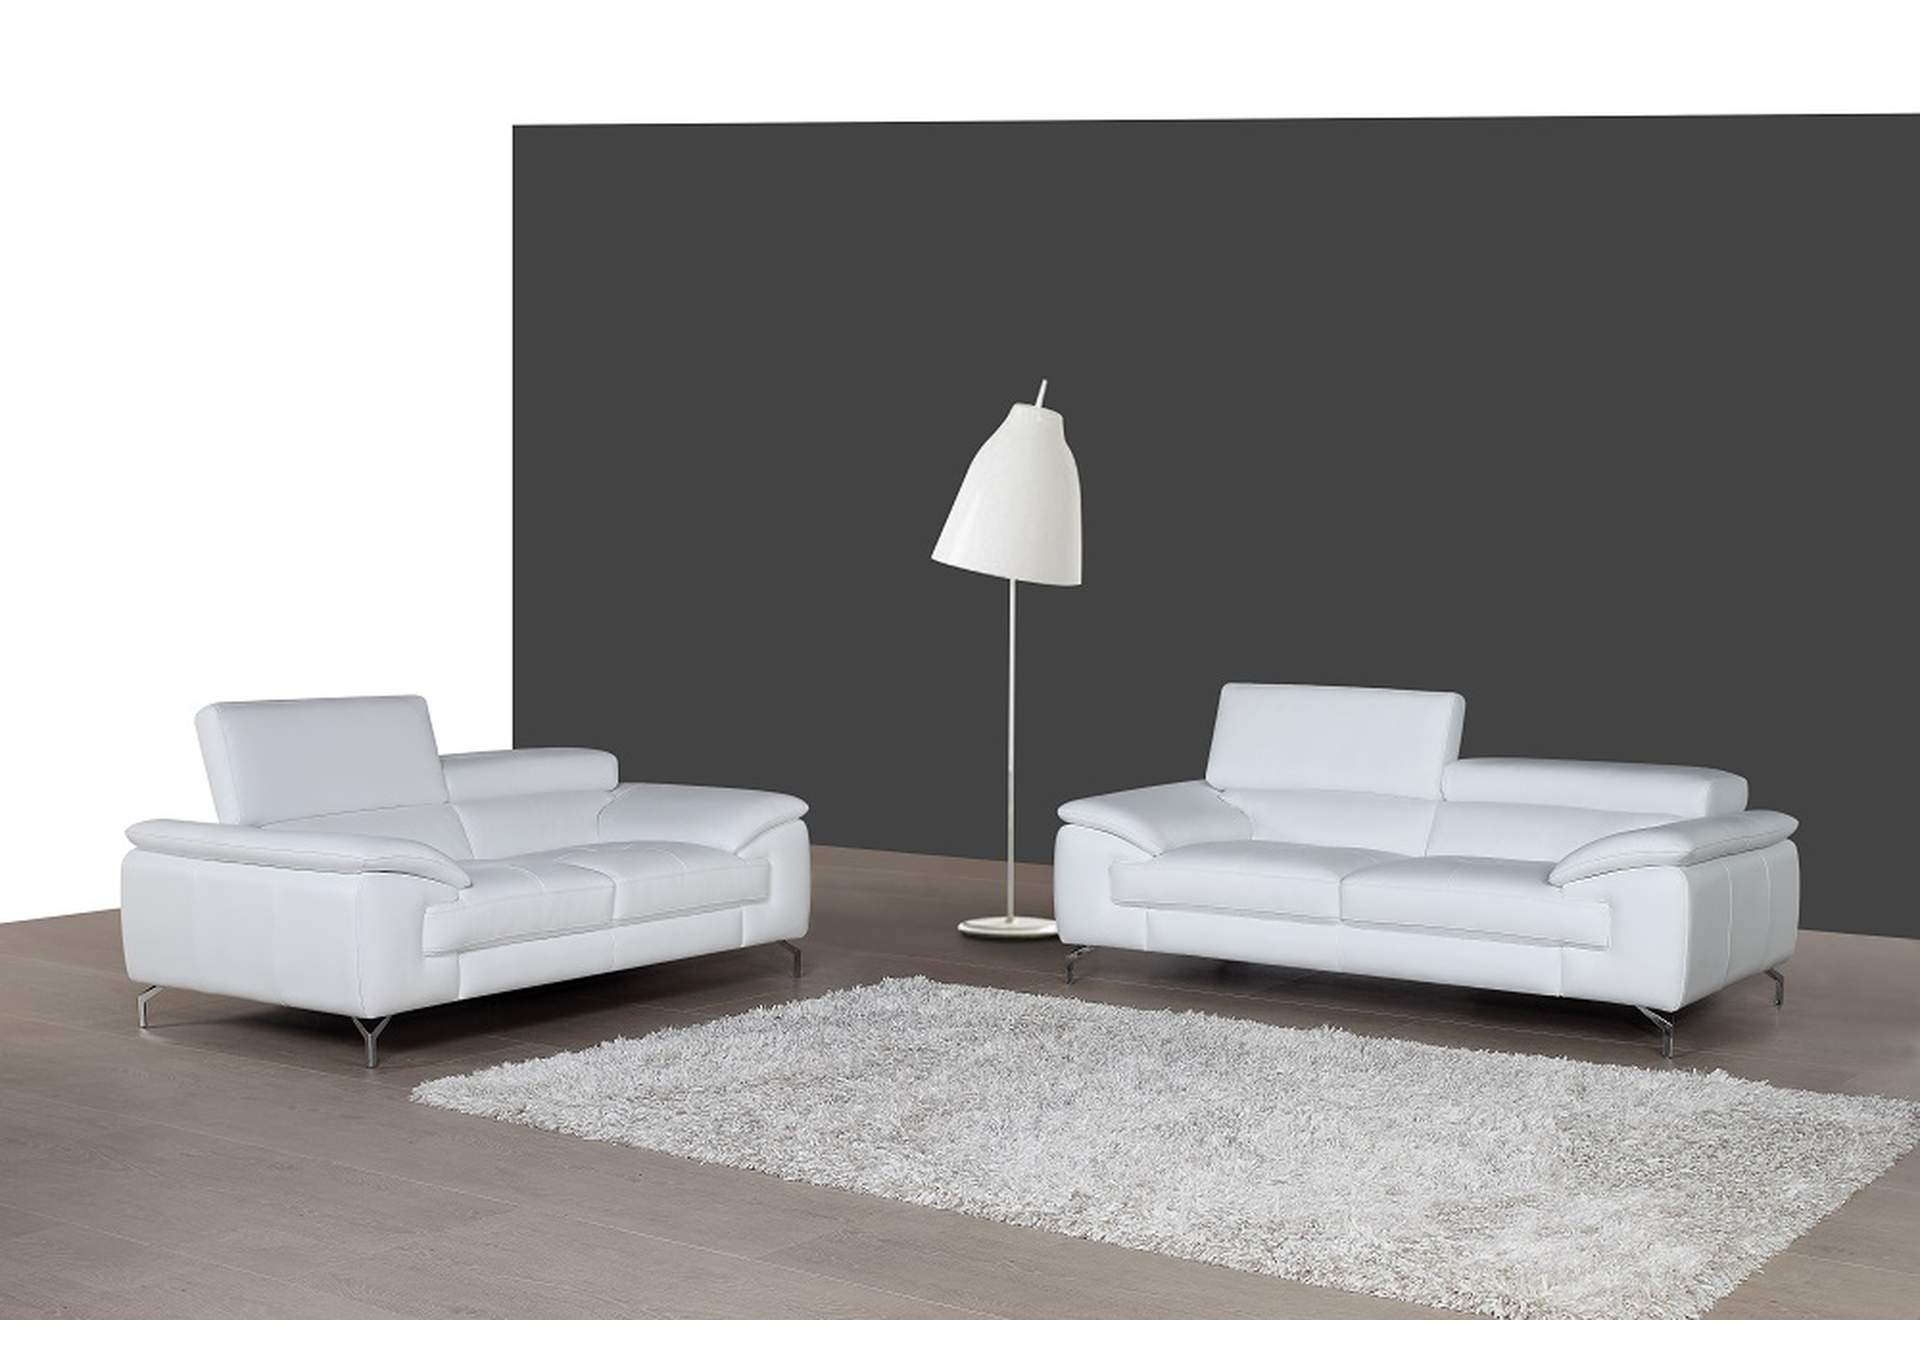 A973 Italian Leather Sofa in White,J&M Furniture